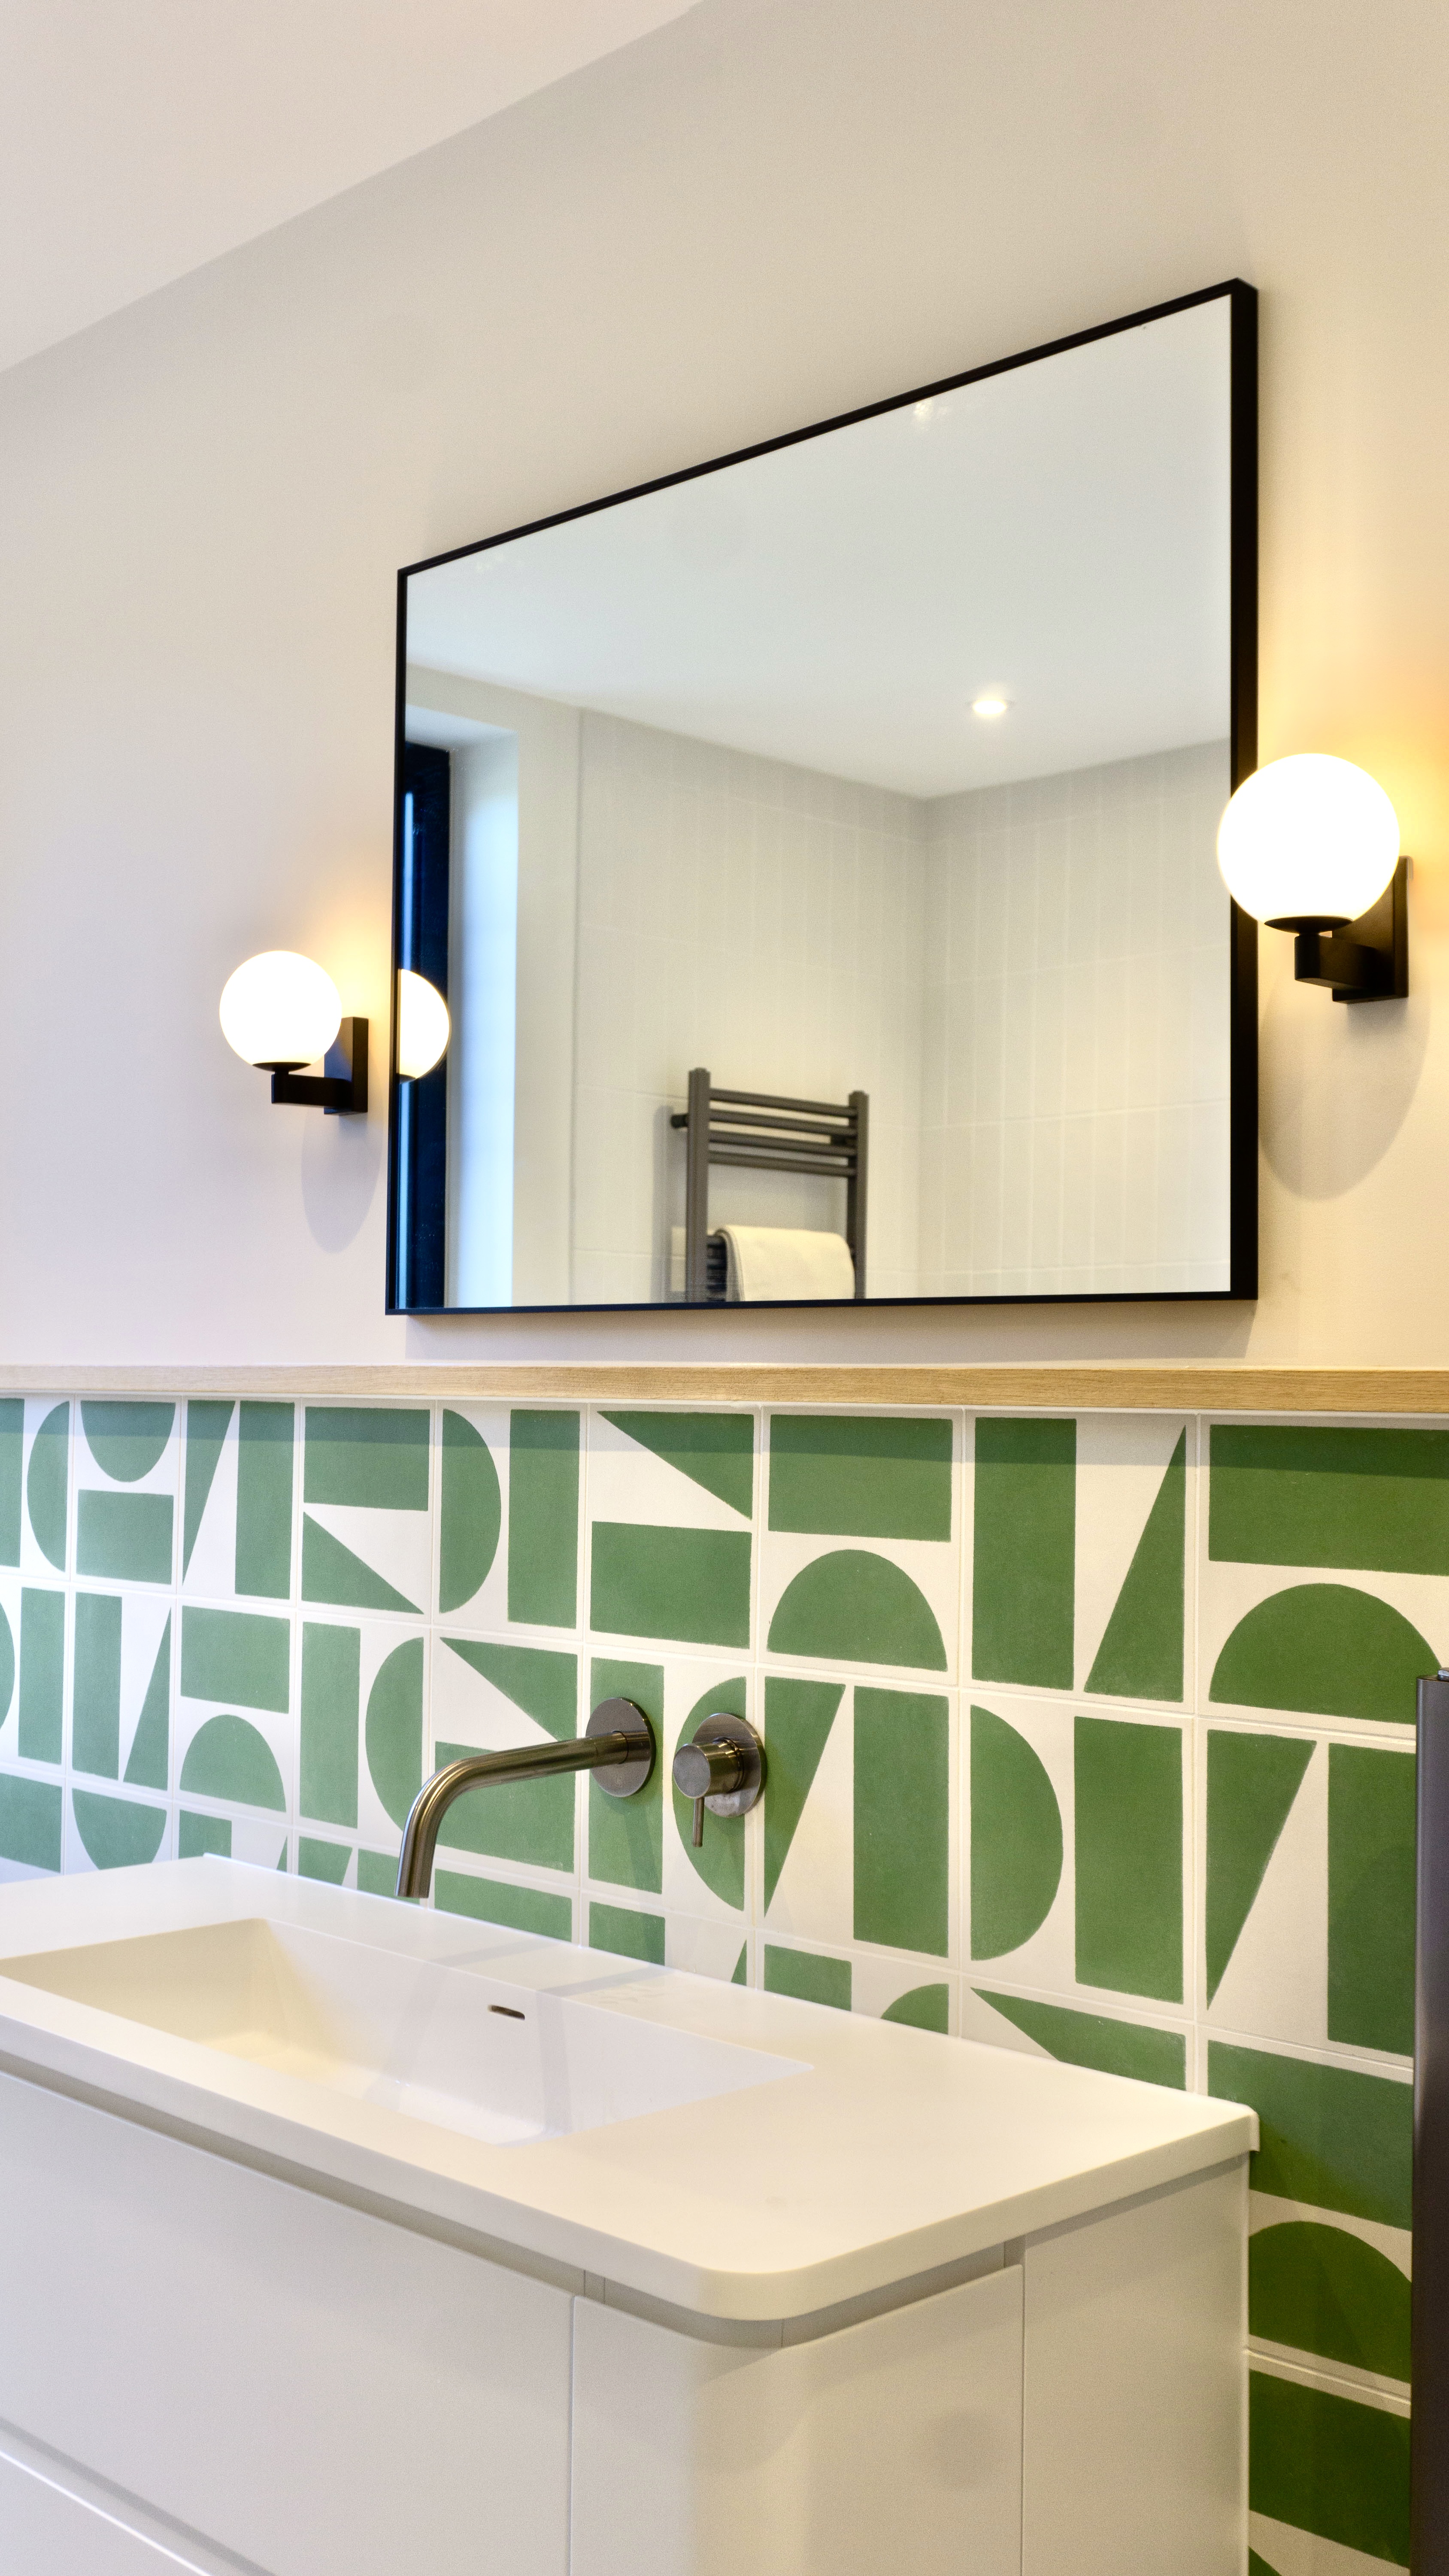 Bathroom with fun green tiles